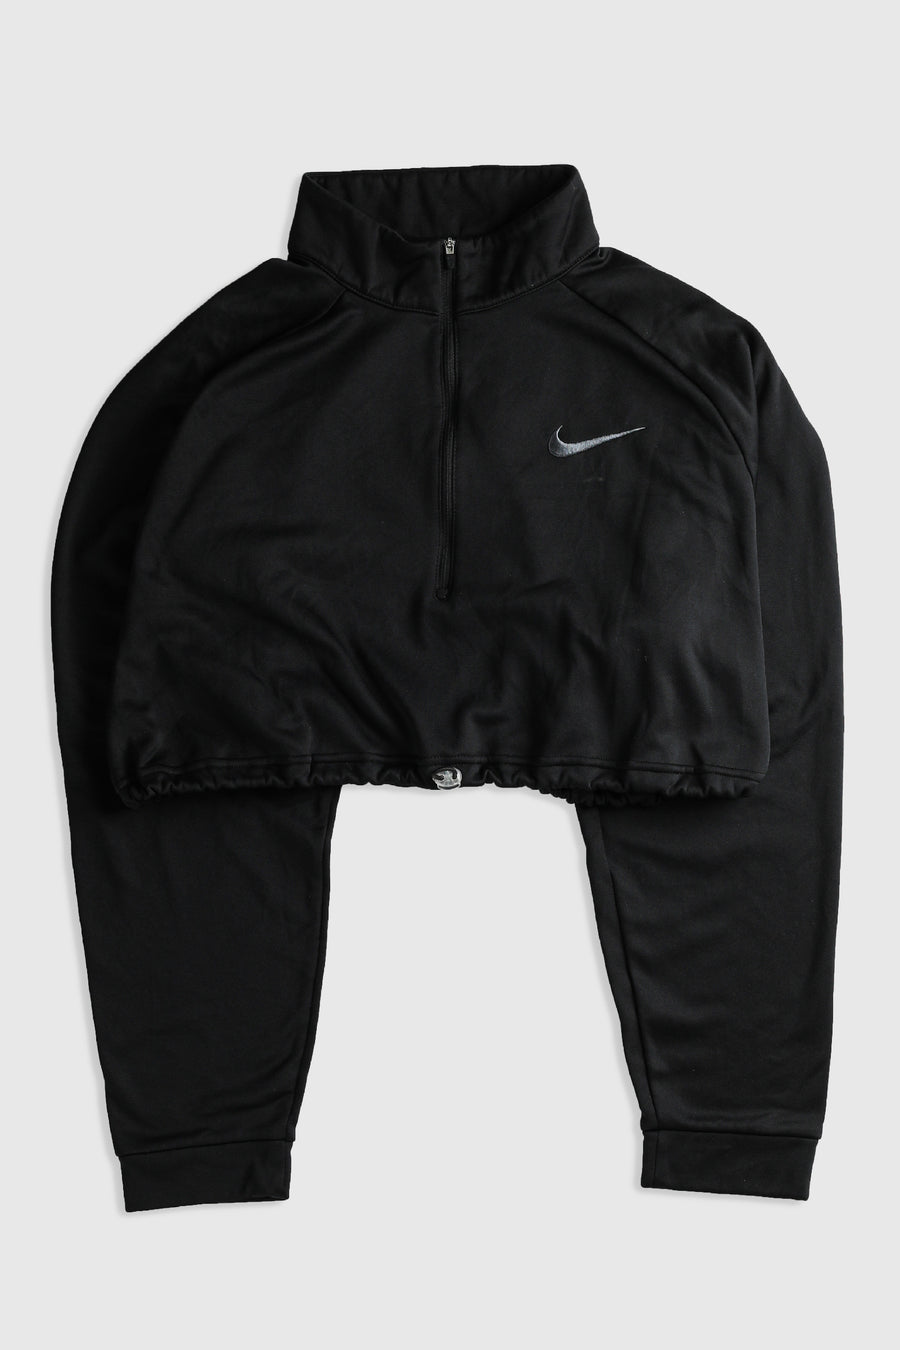 Rework Nike Crop Track Jacket - XL